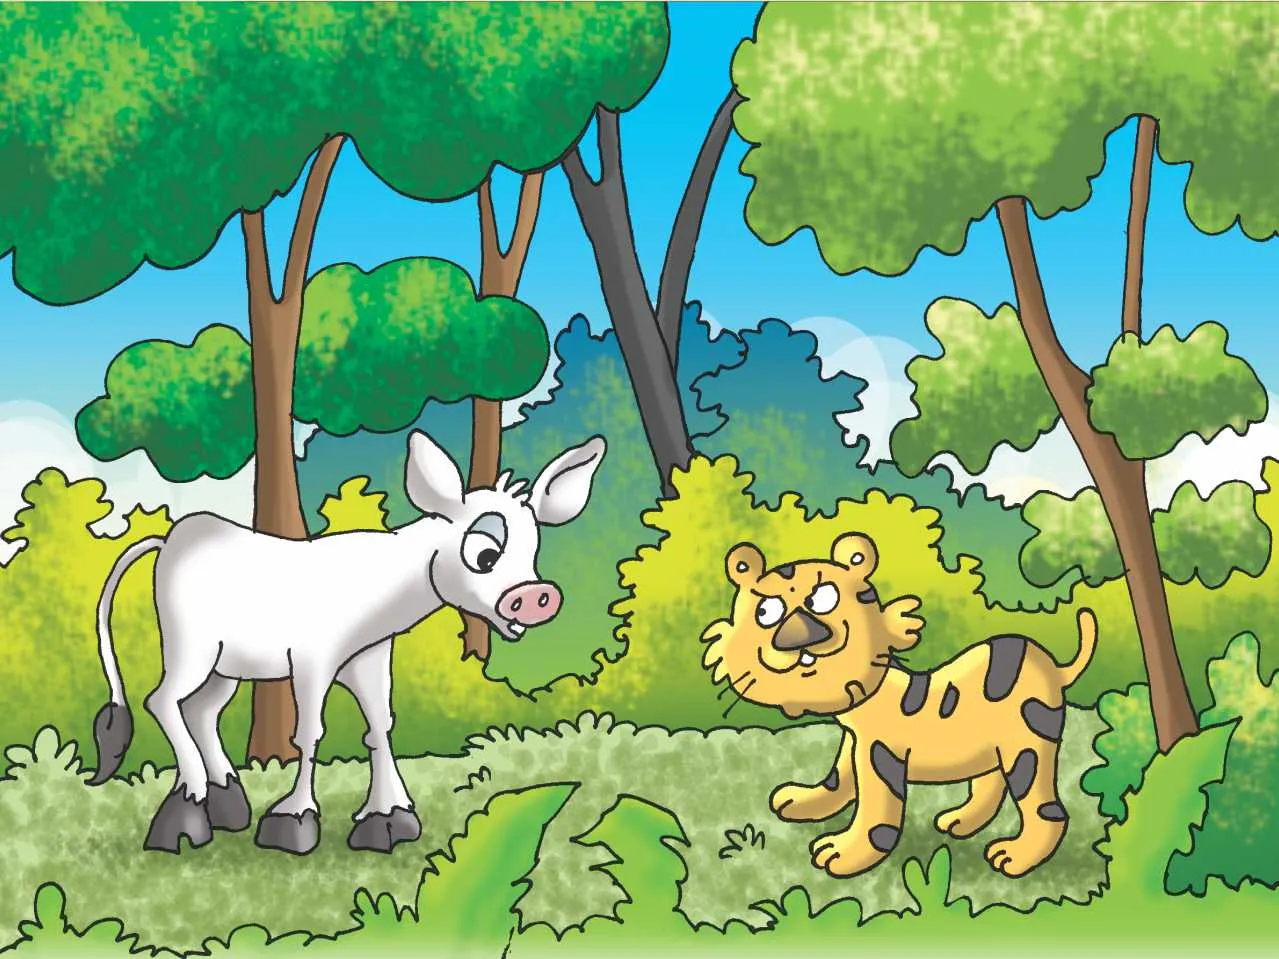 Calf and Cub in Jungle Cartoon image